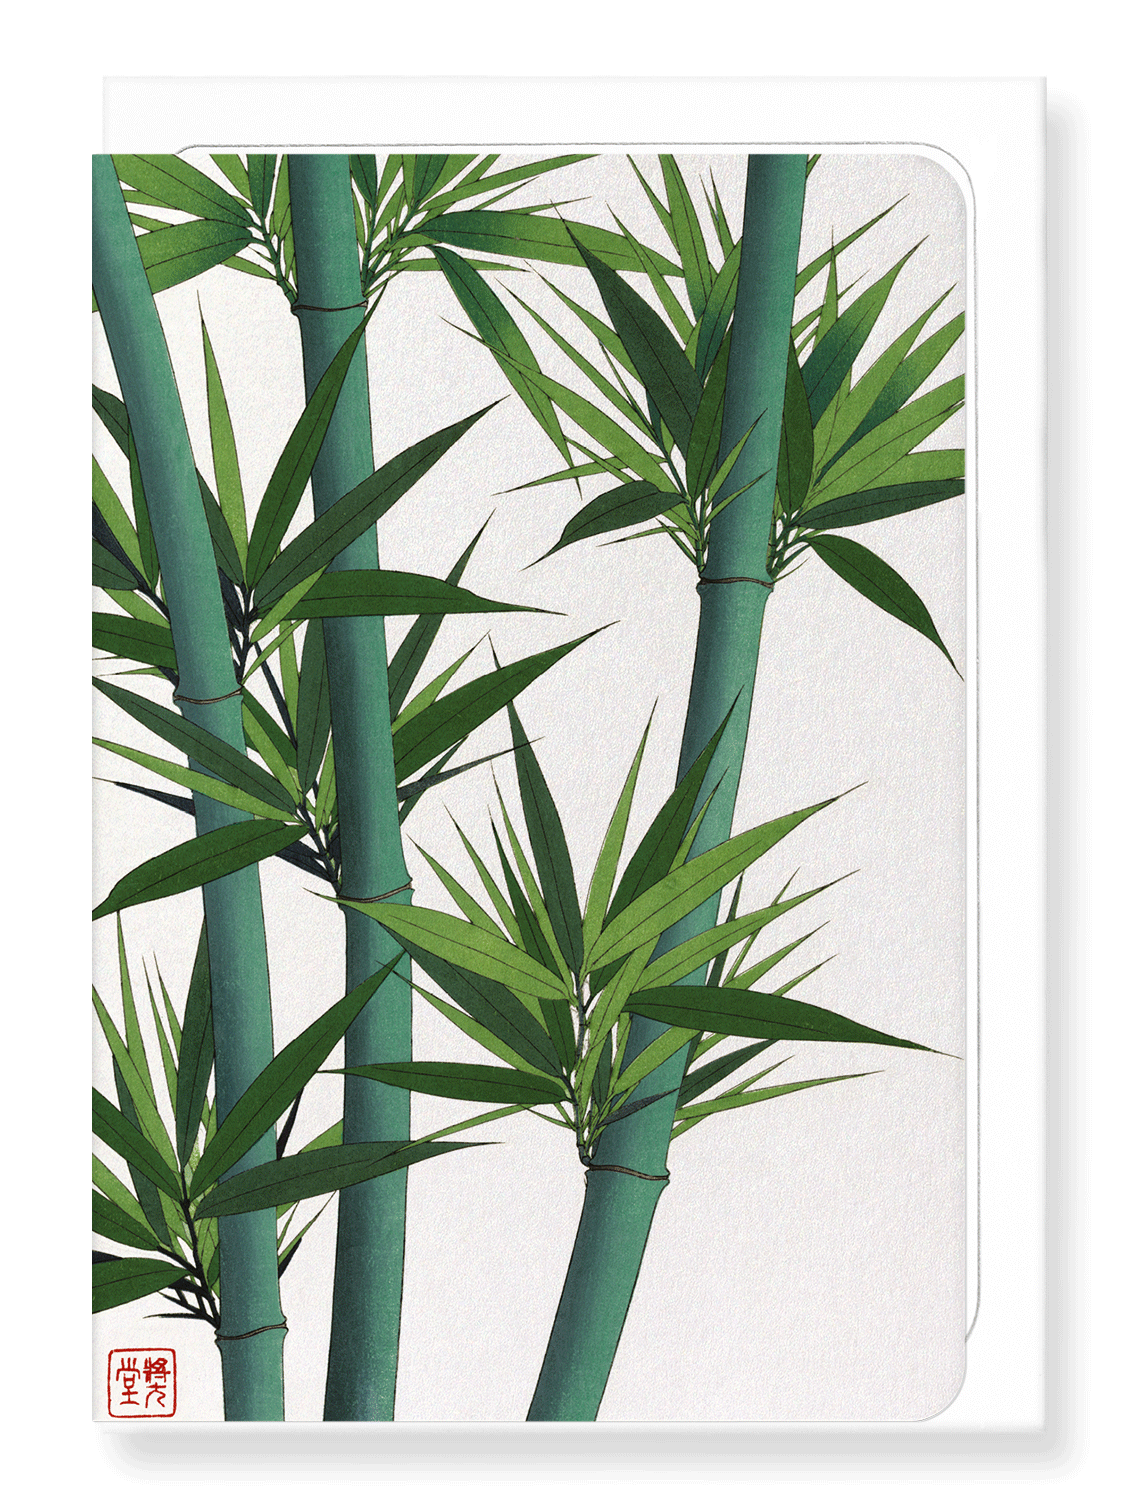 Ezen Designs - Bamboo no.2 - Greeting Card - Front